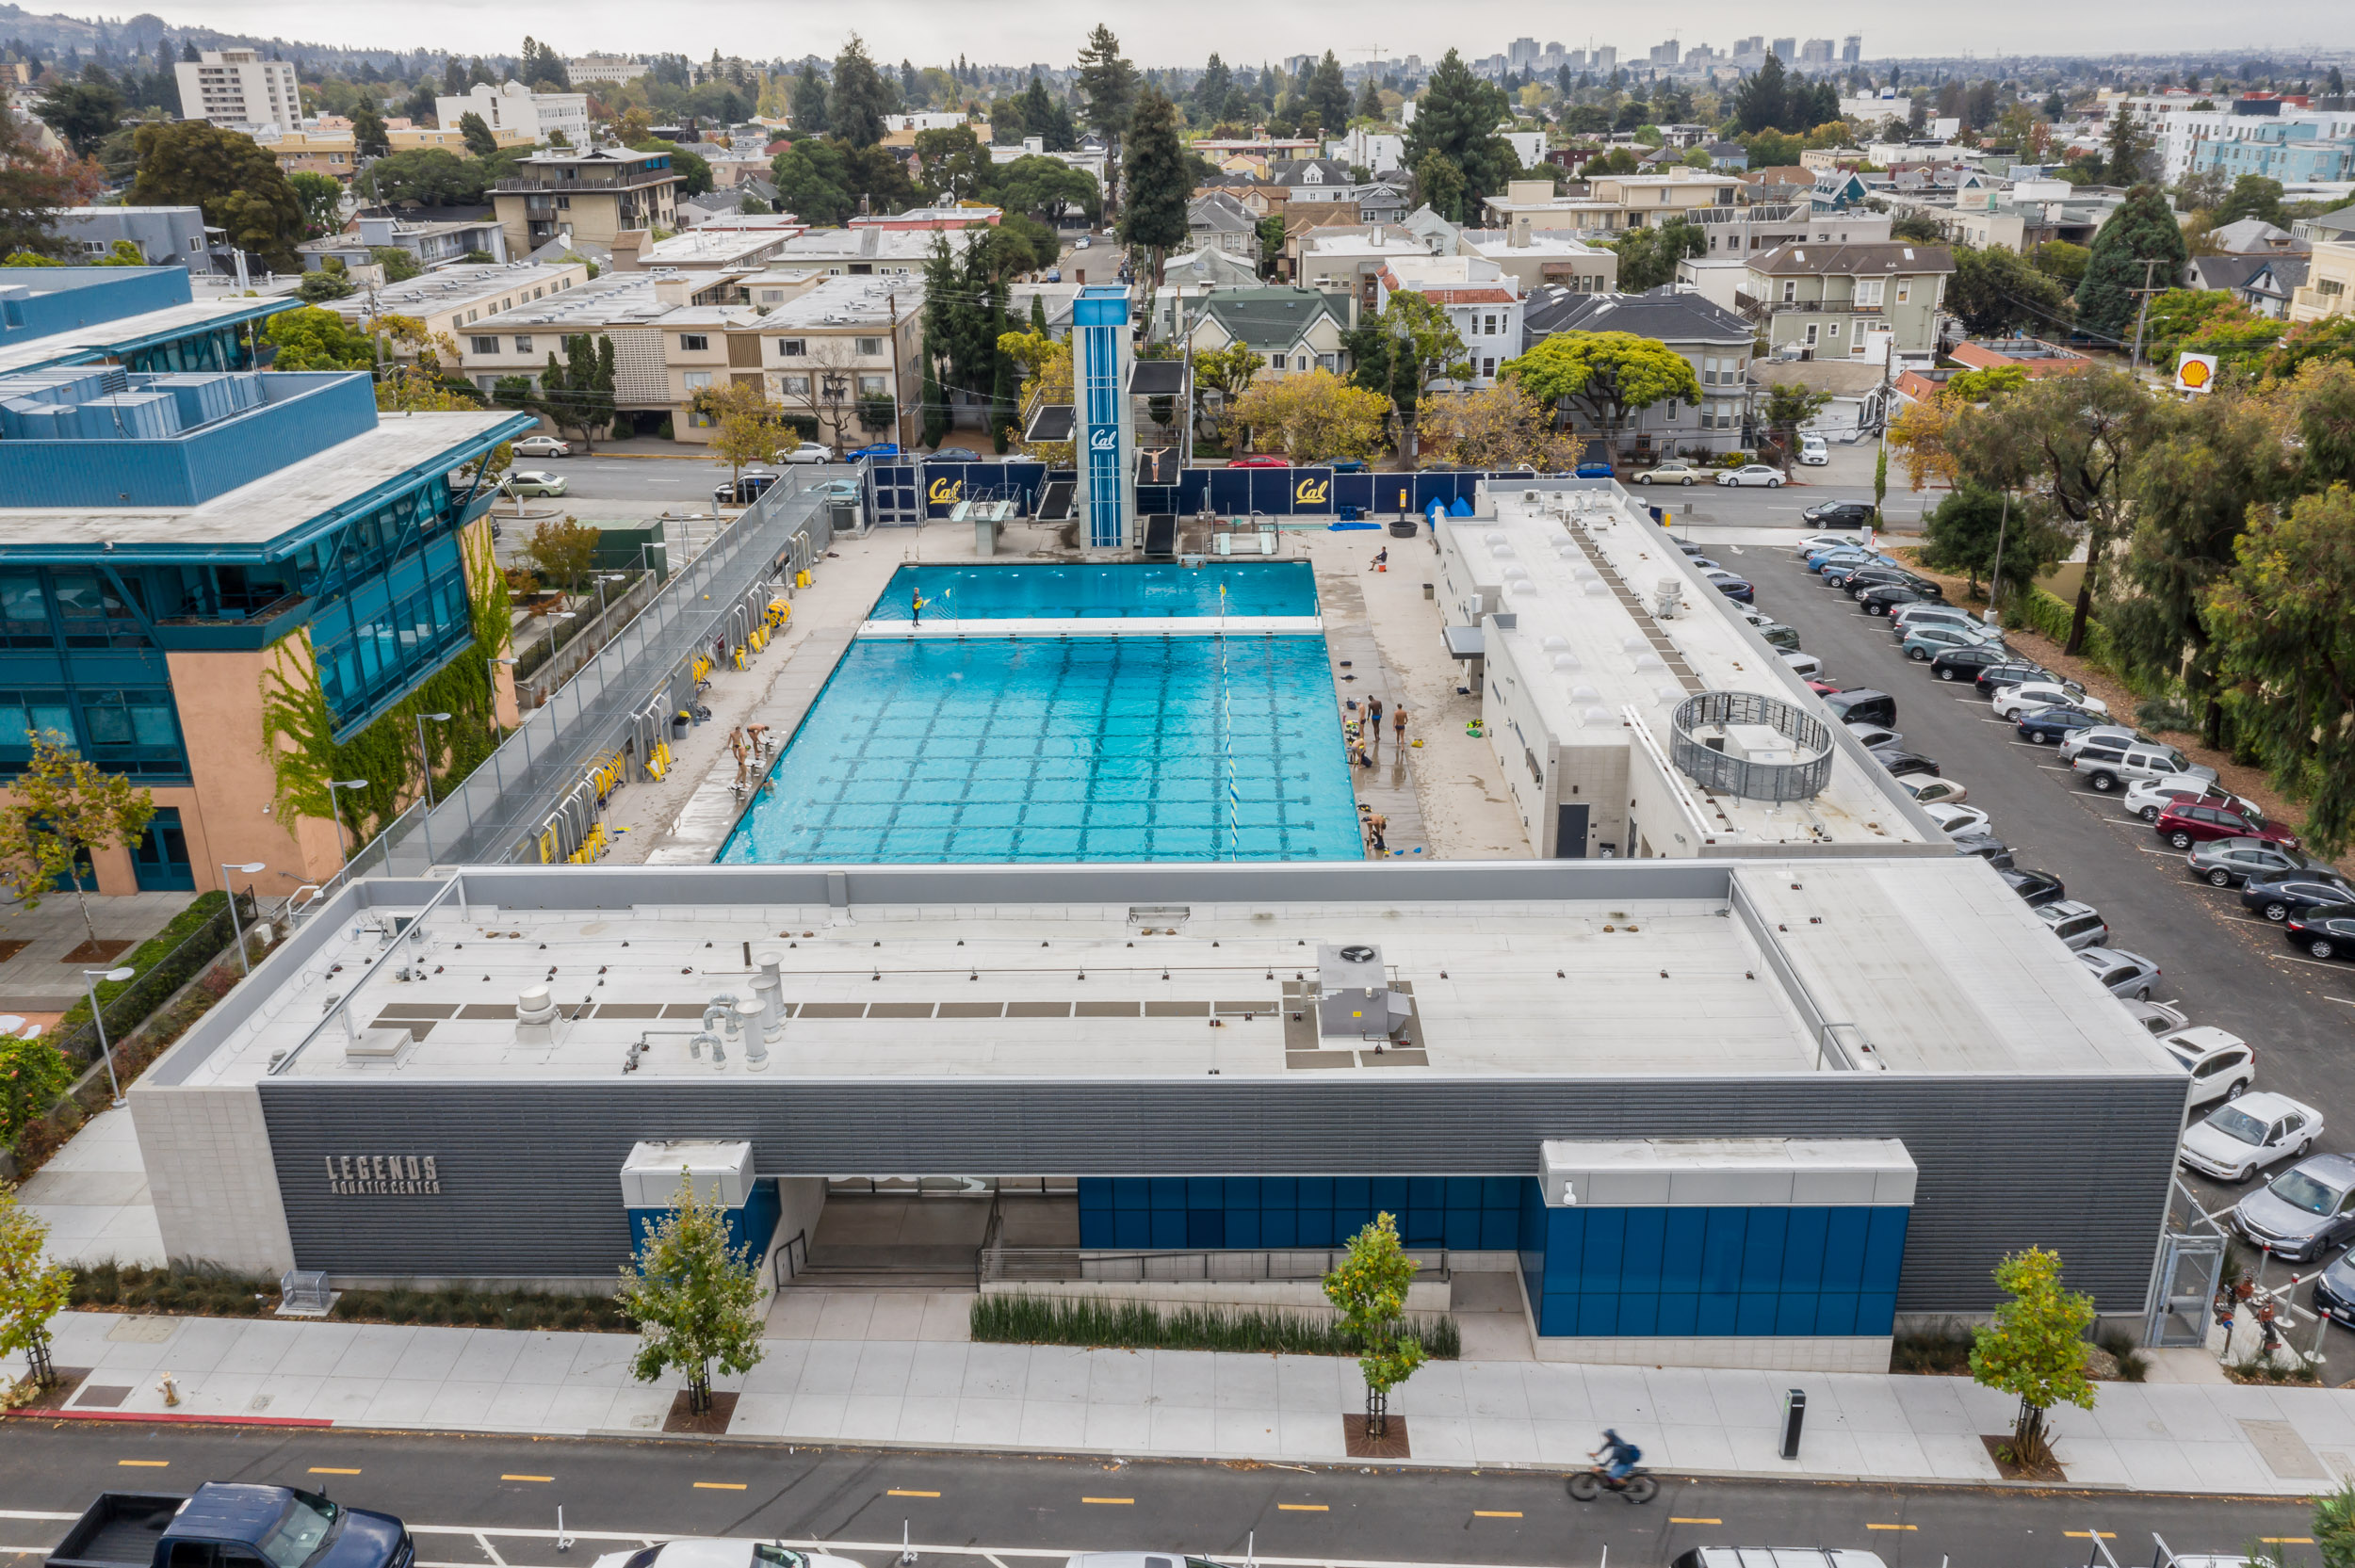 UC Berkeley Legends Aquatics Center